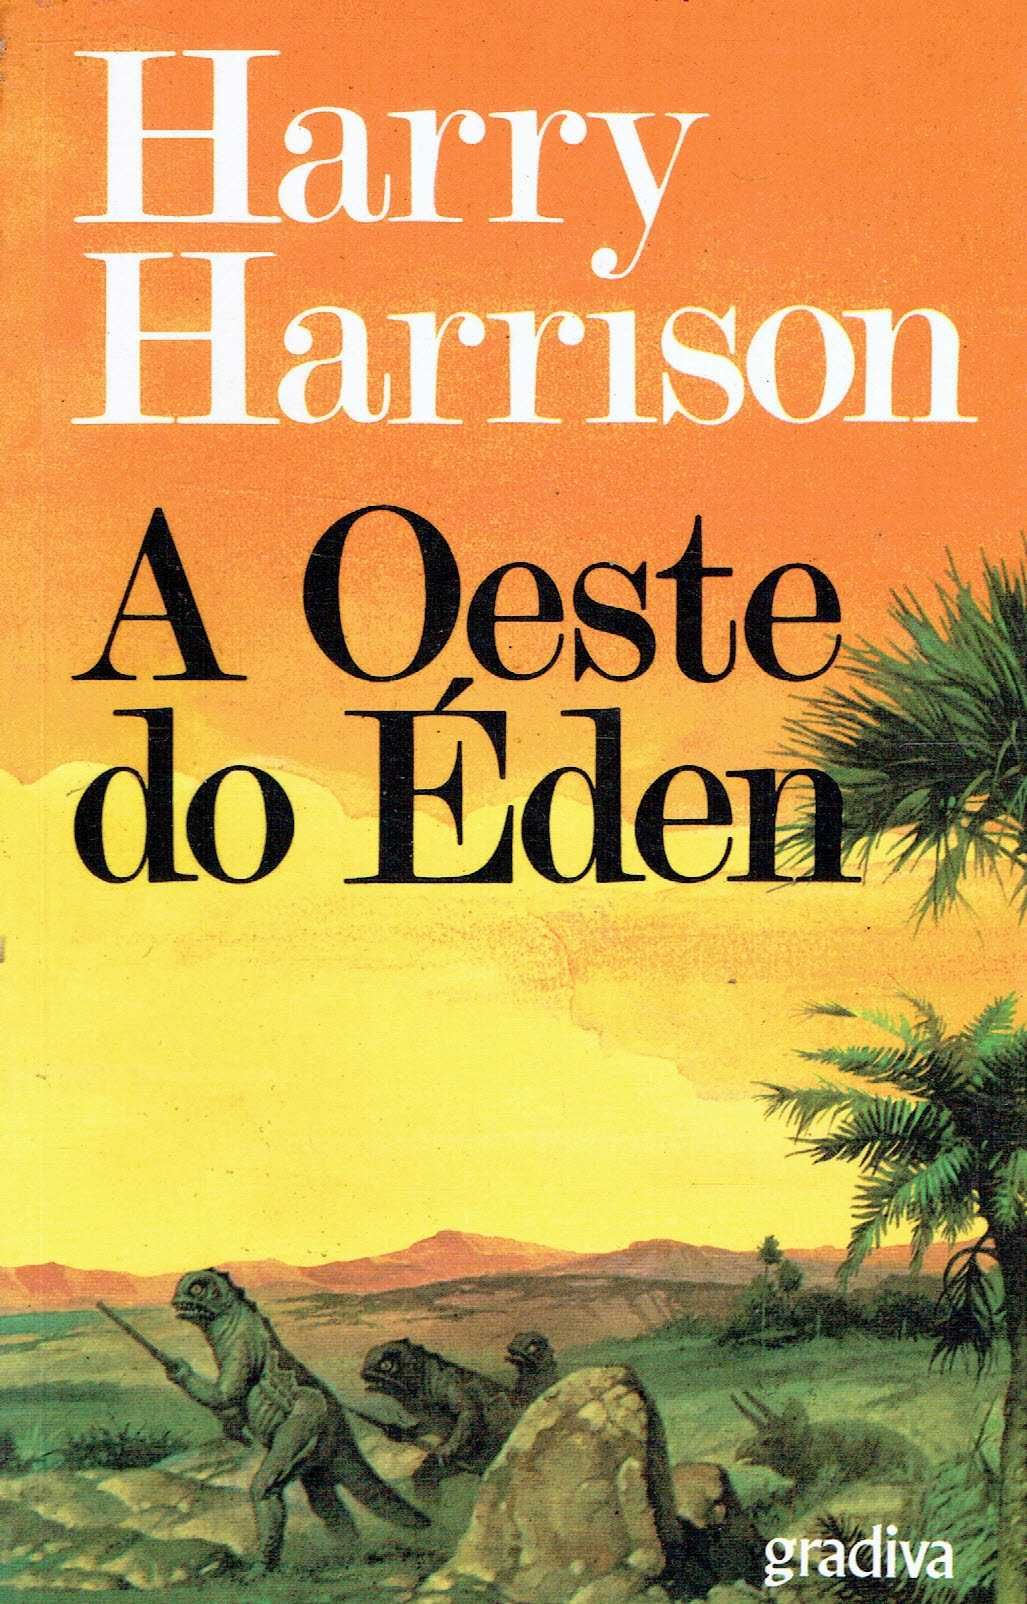 15213

A Oeste do Éden
de Harry Harrison